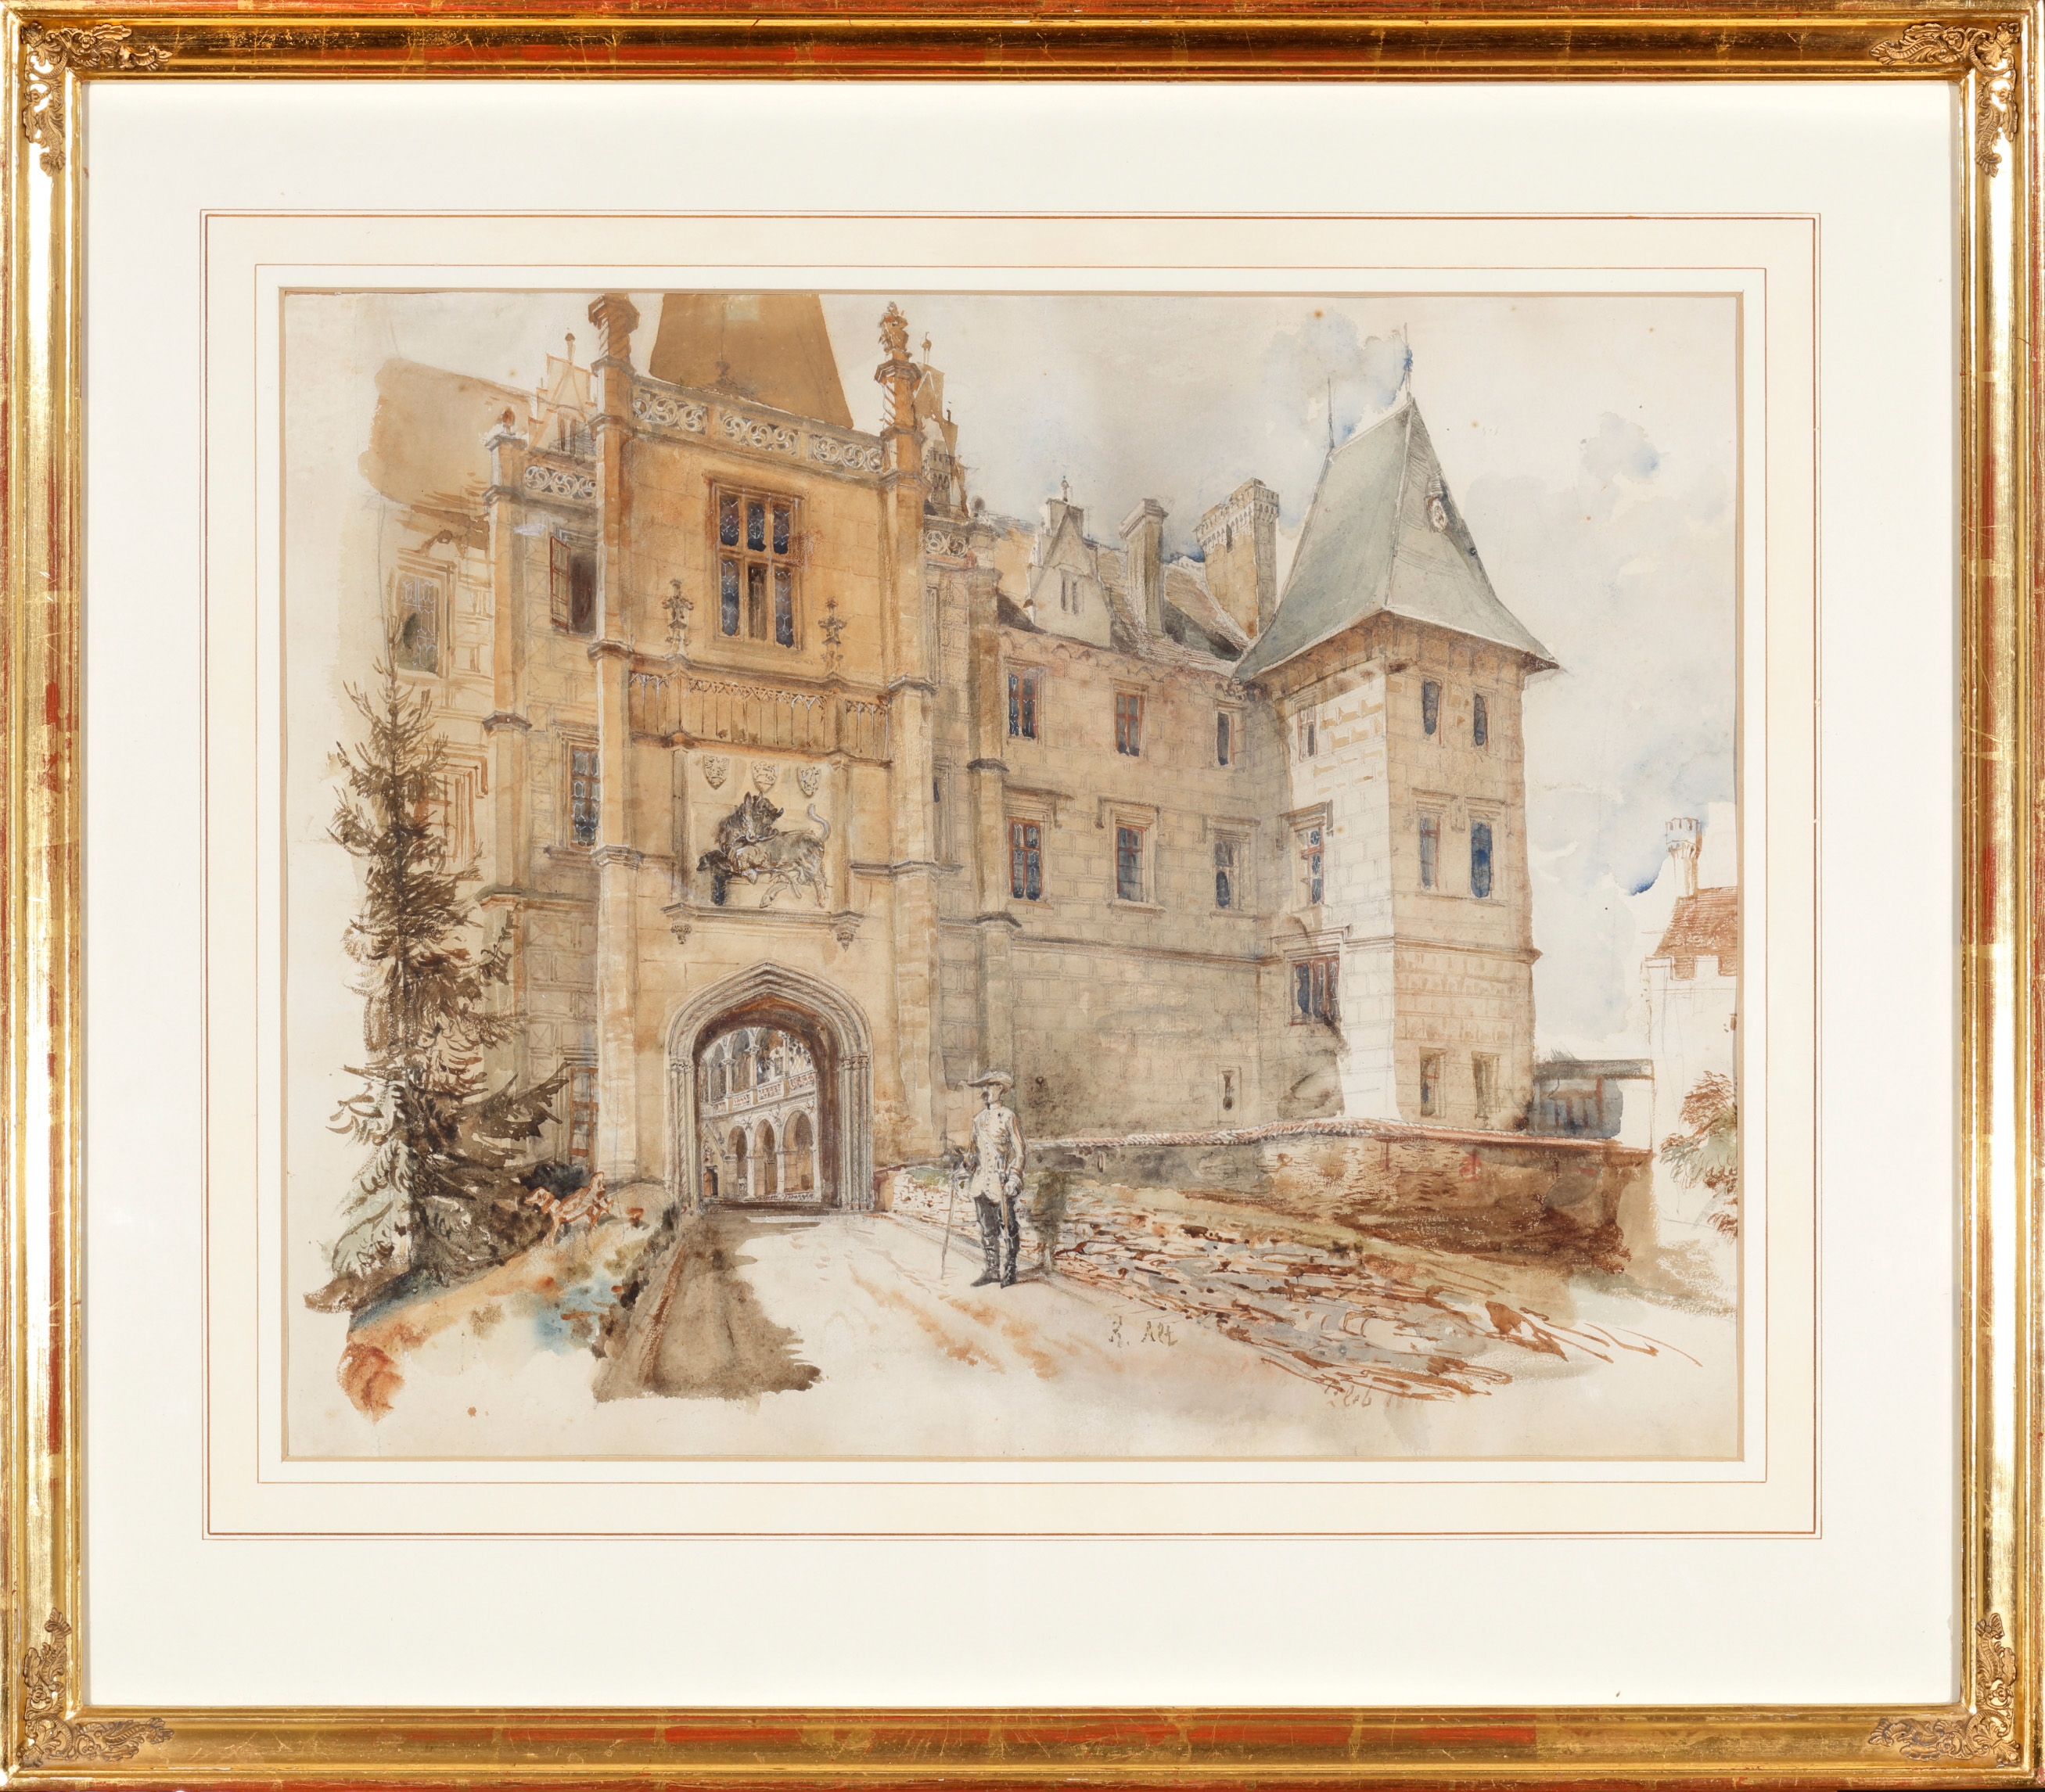 Chateaux of Zleby by Rudolf von Alt, 1856